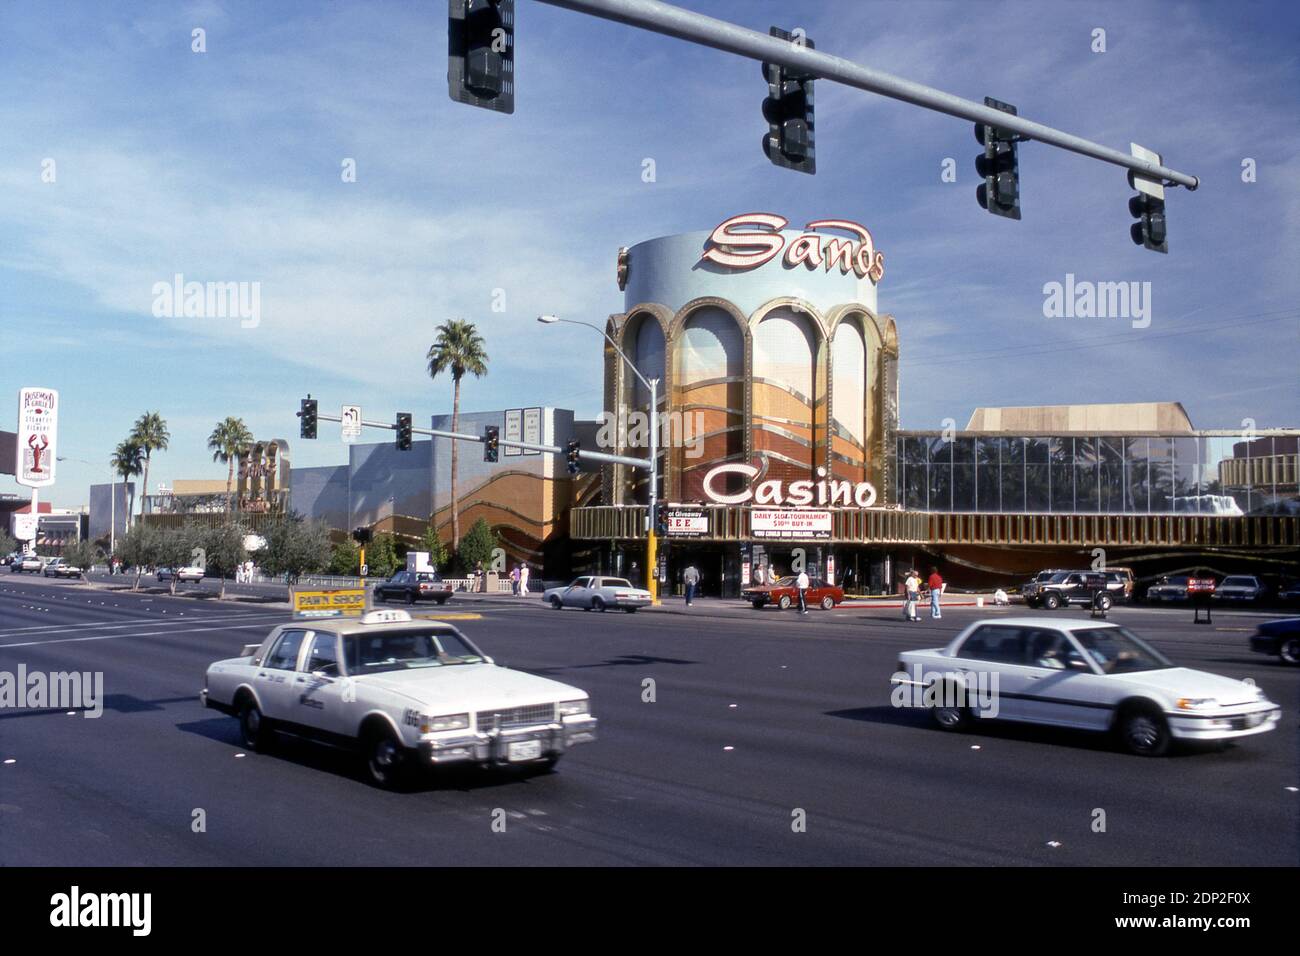 Sands Hotel and Casino in Las Vegas, Nevada Stock Photo - Alamy